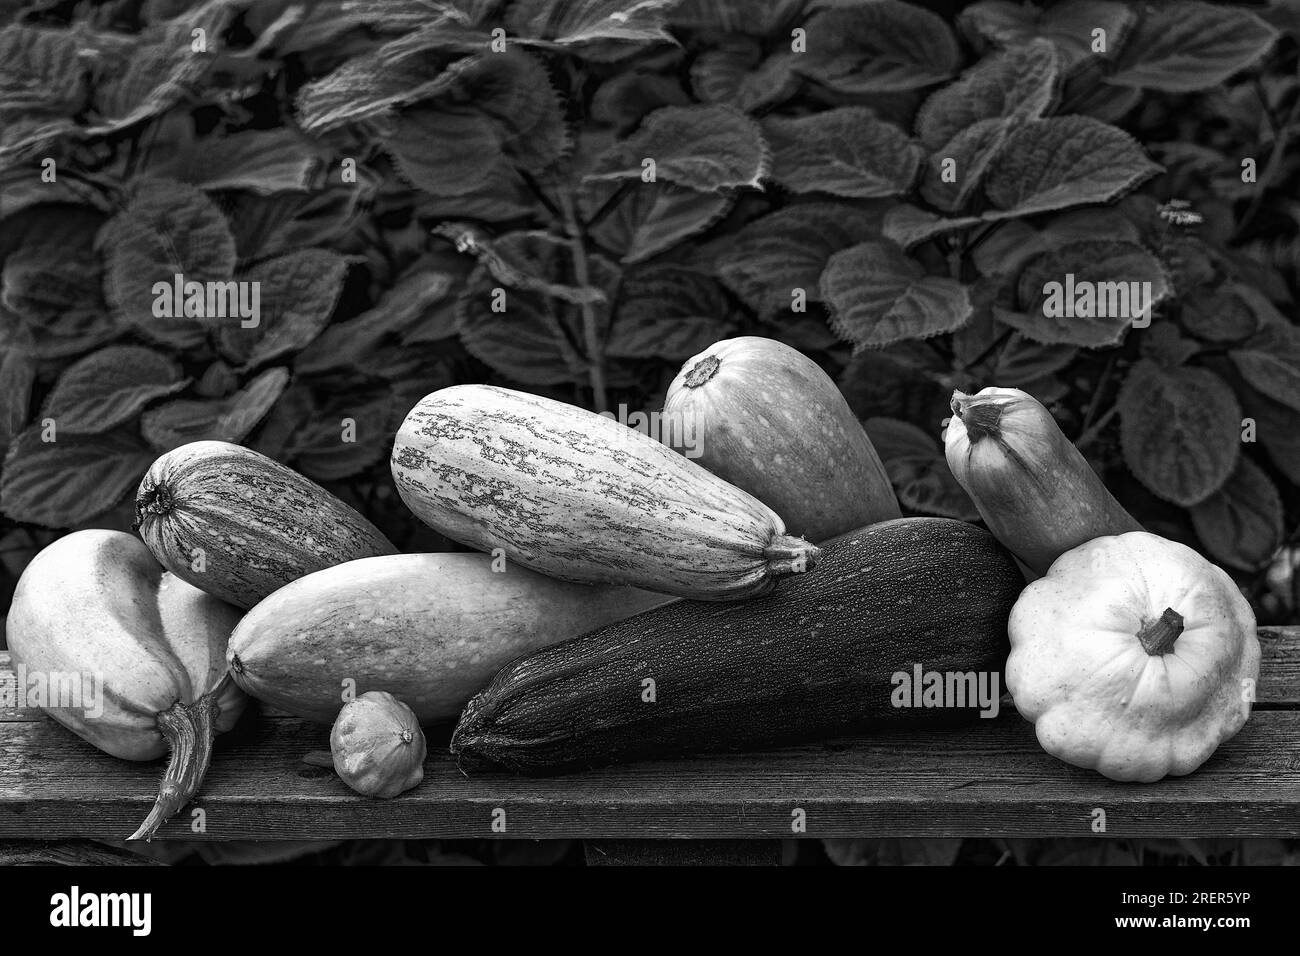 Photo vegetables,squash Stock Photo